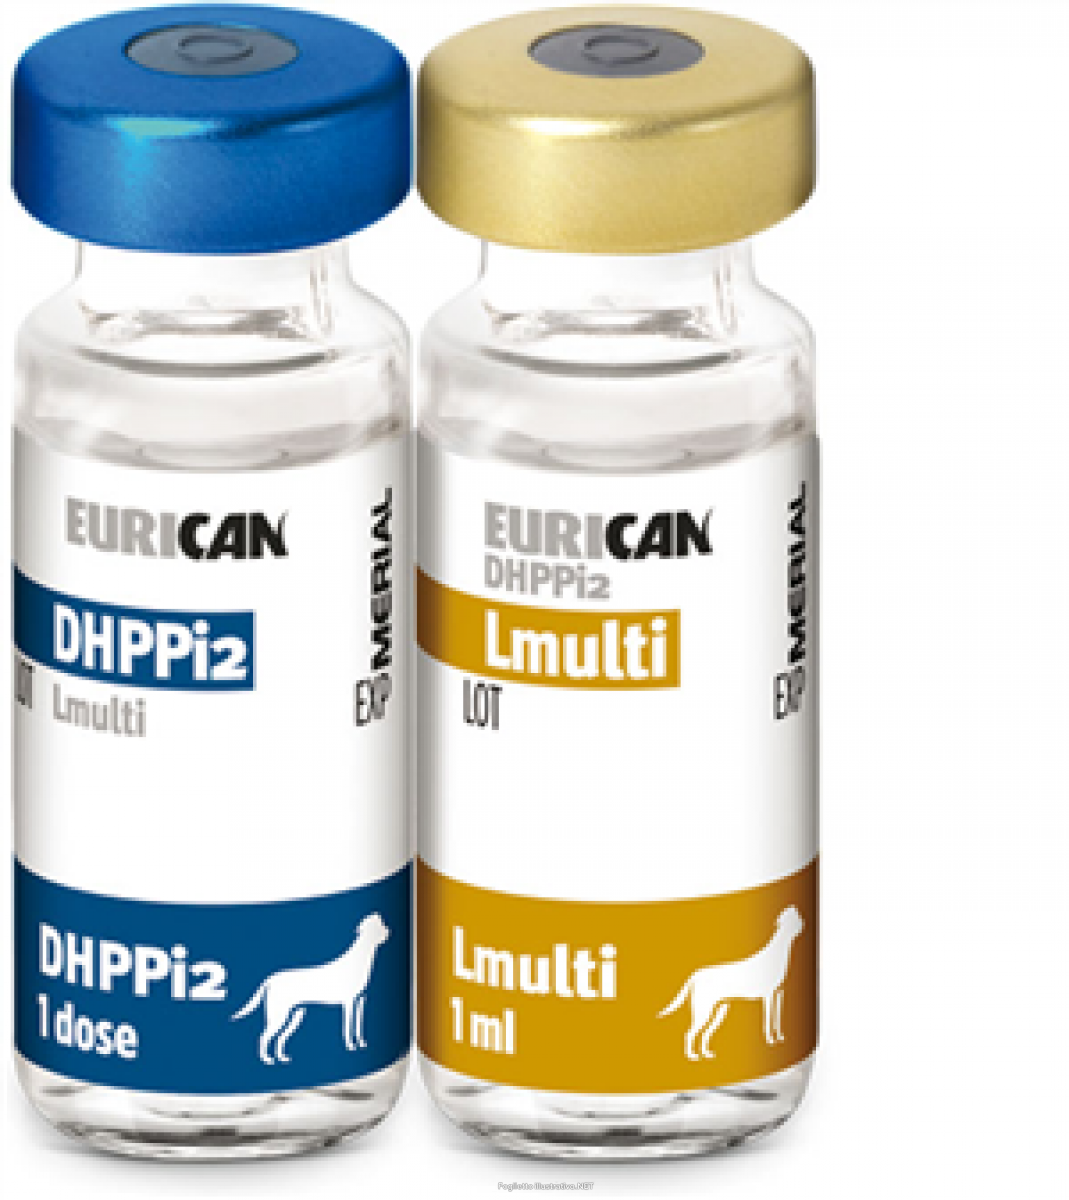 Вакцина эурикан lr. Эурикан dhppi2 вакцина для собак. Эурикан LR И dhppi2. Эурикан DHPPI+L для собак. Вакцина Merial Эурикан.